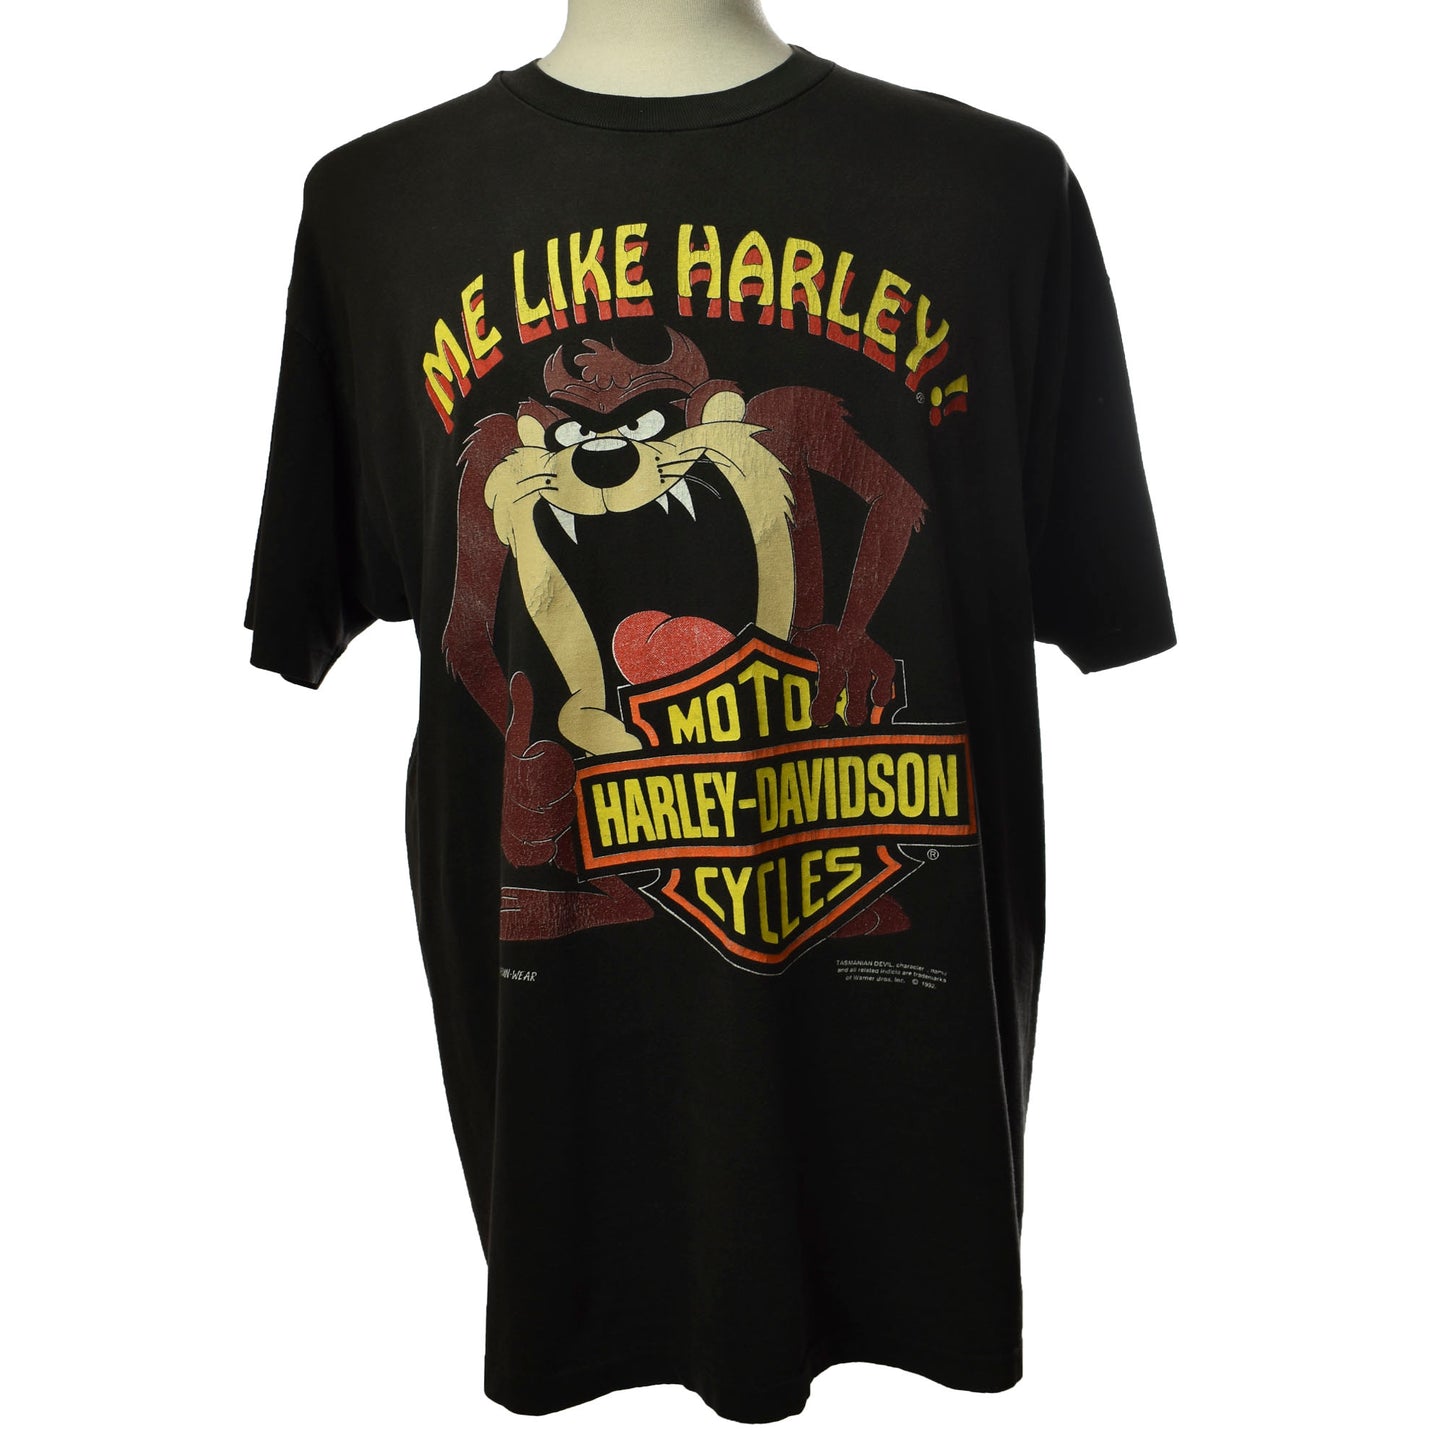 Vintage 1992 Me Like Harley Tasmanian Devil Graphic Harley Davidson Single Stitch Made in USA T-shirt